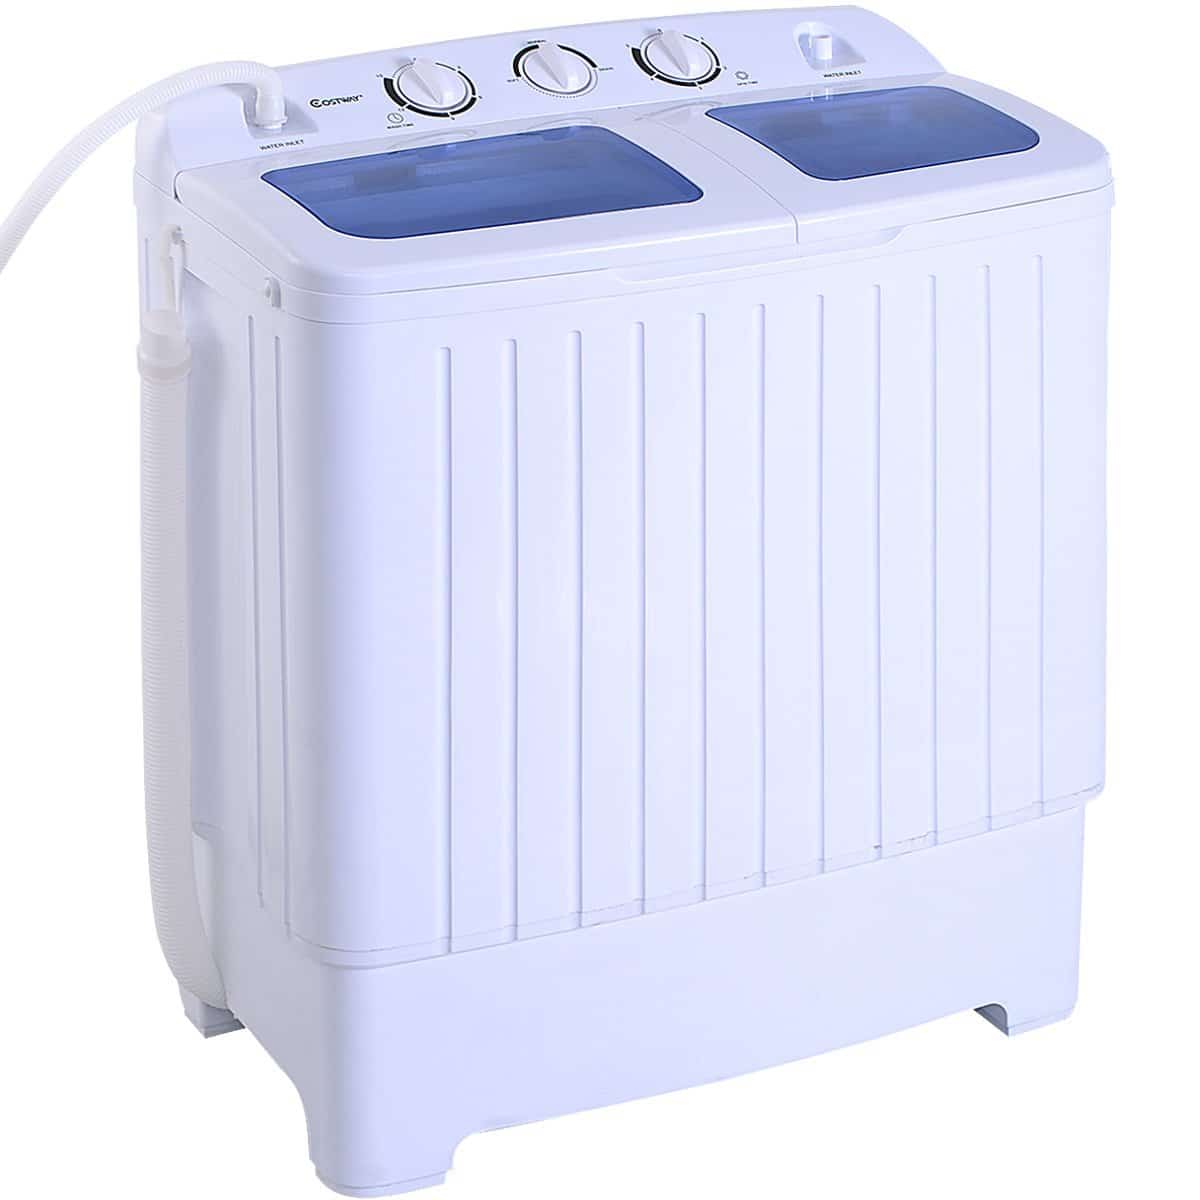 Best Portable Washing Machines 2018: Giantex Compact Washer